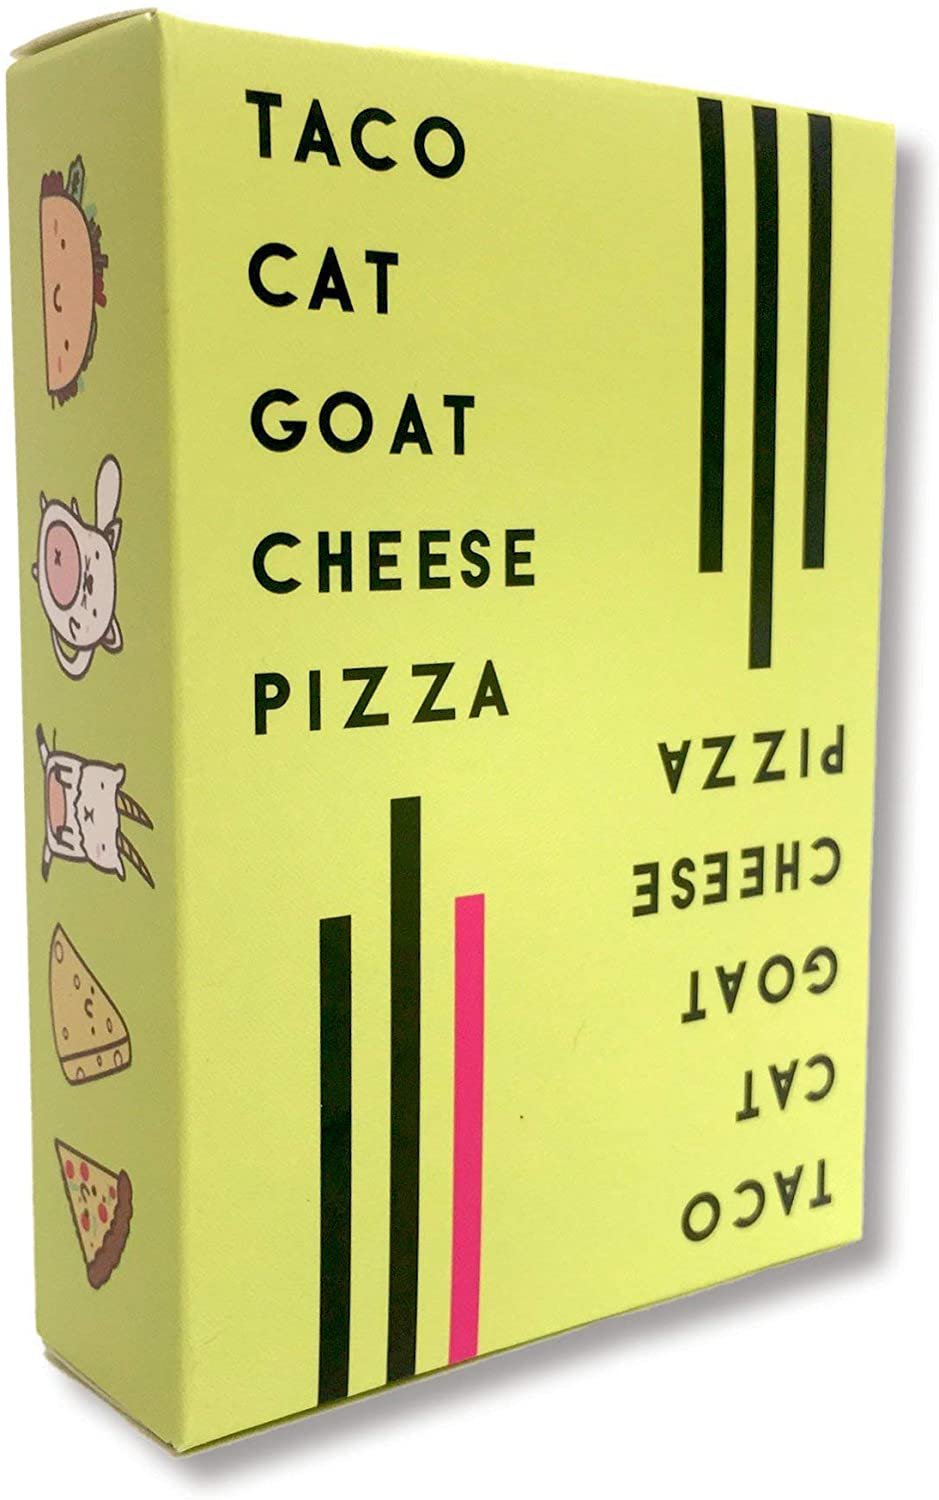 Taco Cat Goat Cheese Pizza.jpg